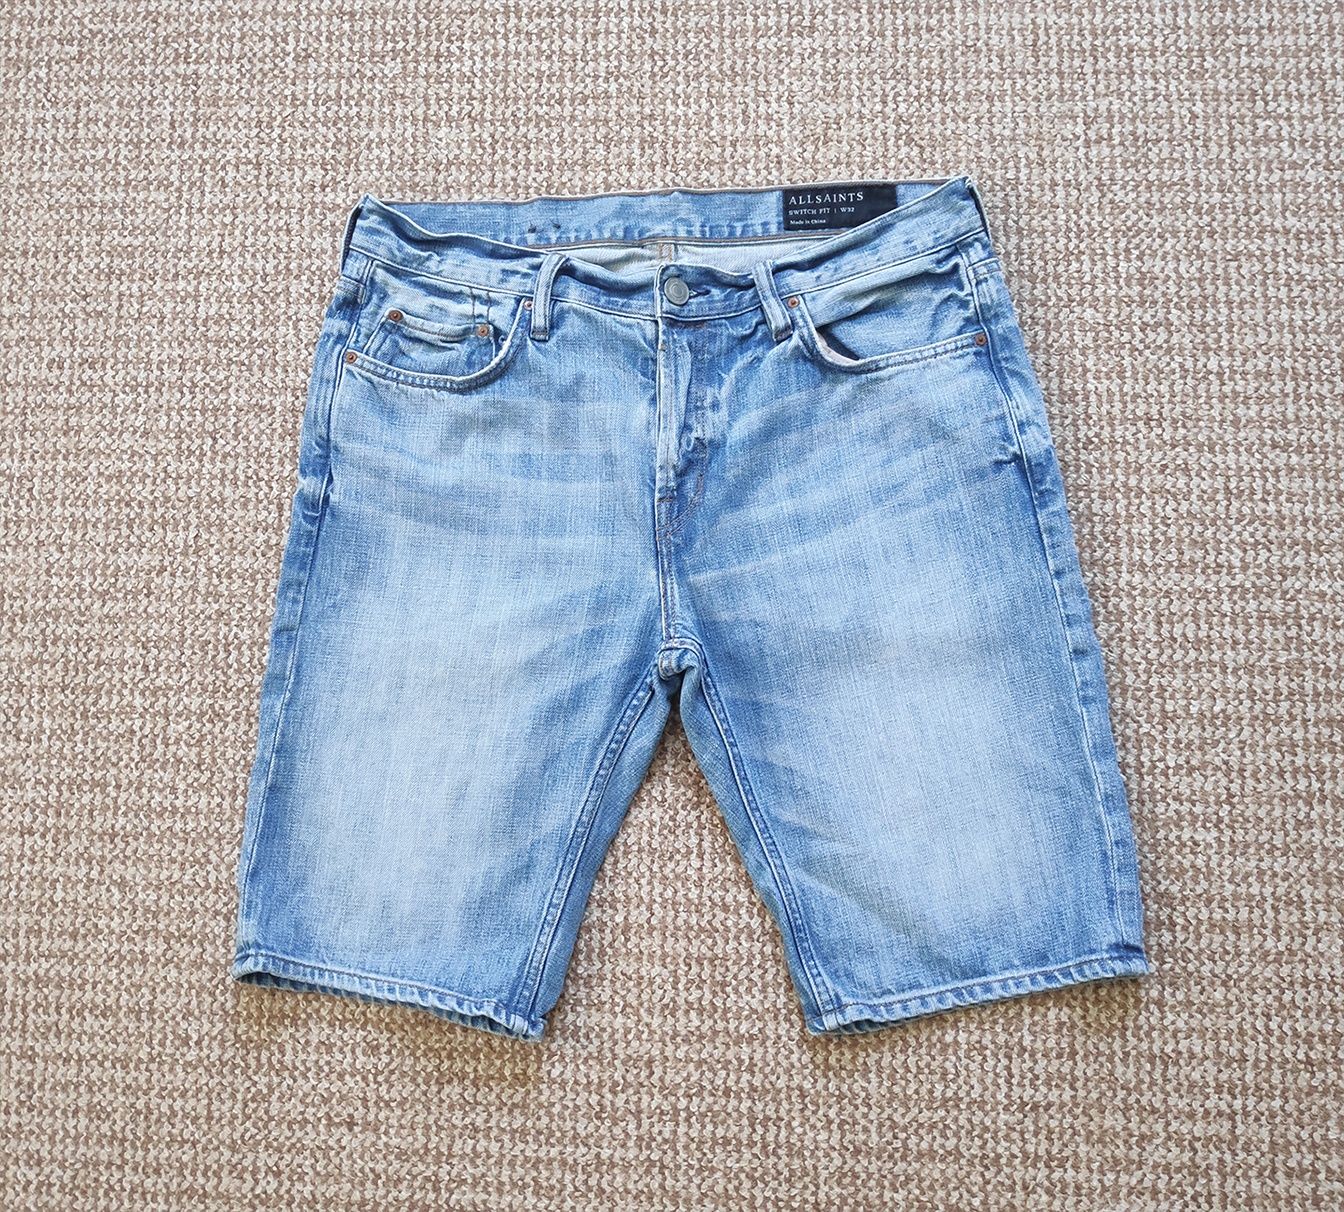 ALL SAINTS W32 - M Hanako Switch Shorts шорты джинсовые ОРИГИНАЛ